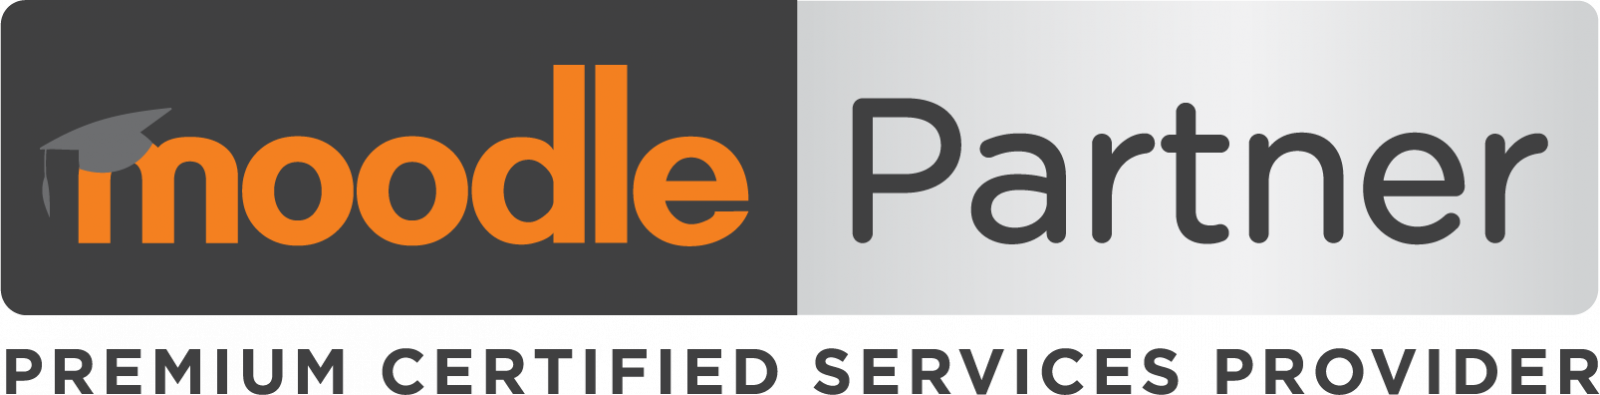 Moodle Partner - Premium Certified Services Provider